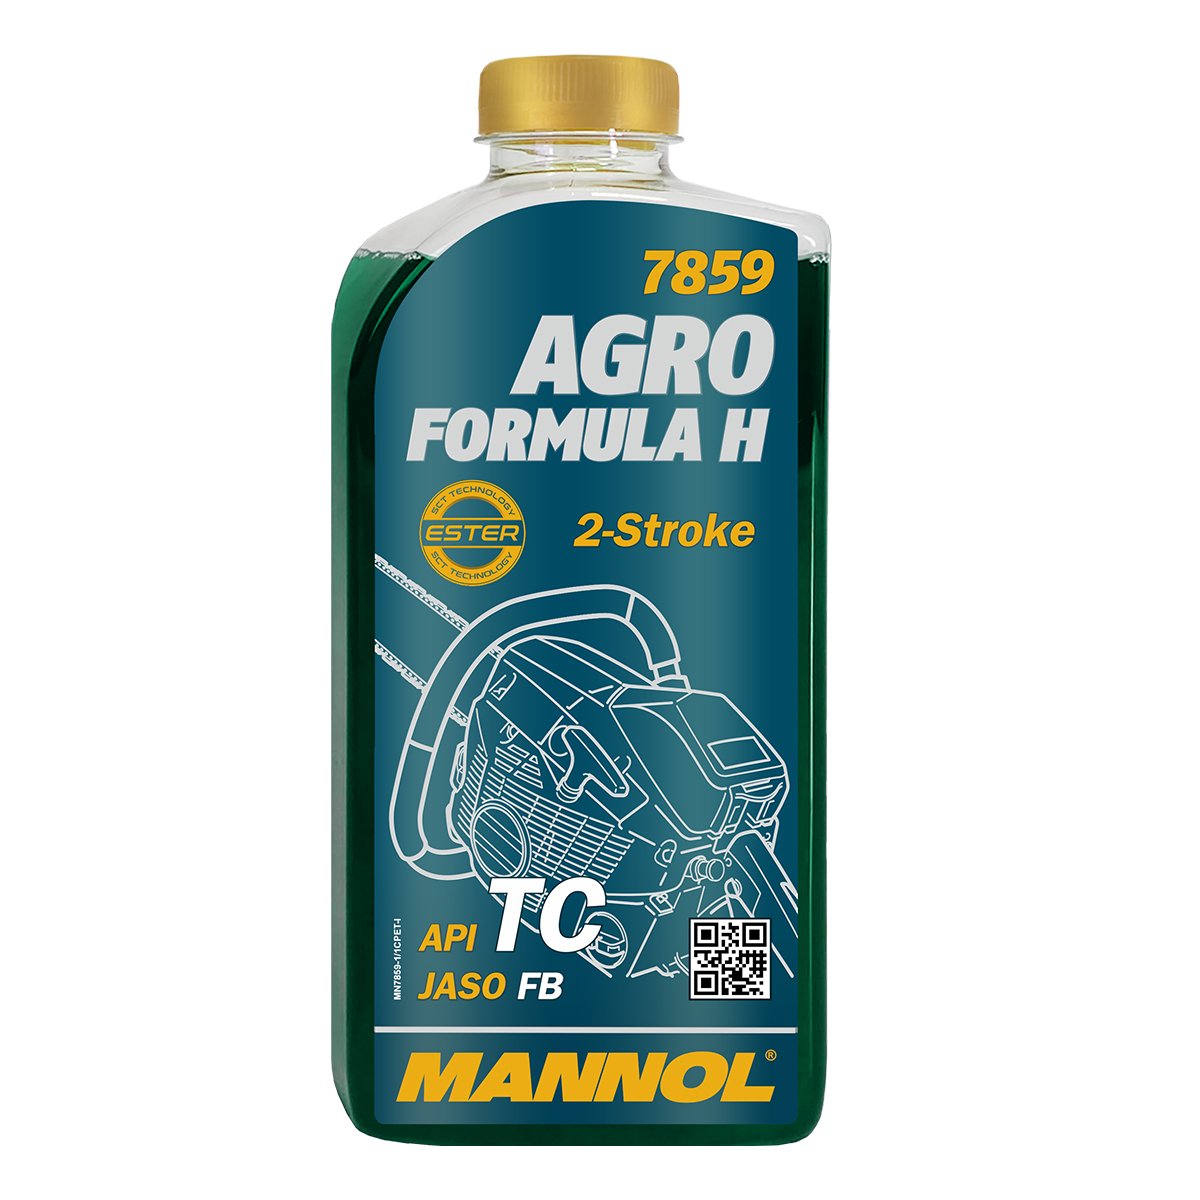 MANNOL Agro Formula H 7859 1л моторное масло